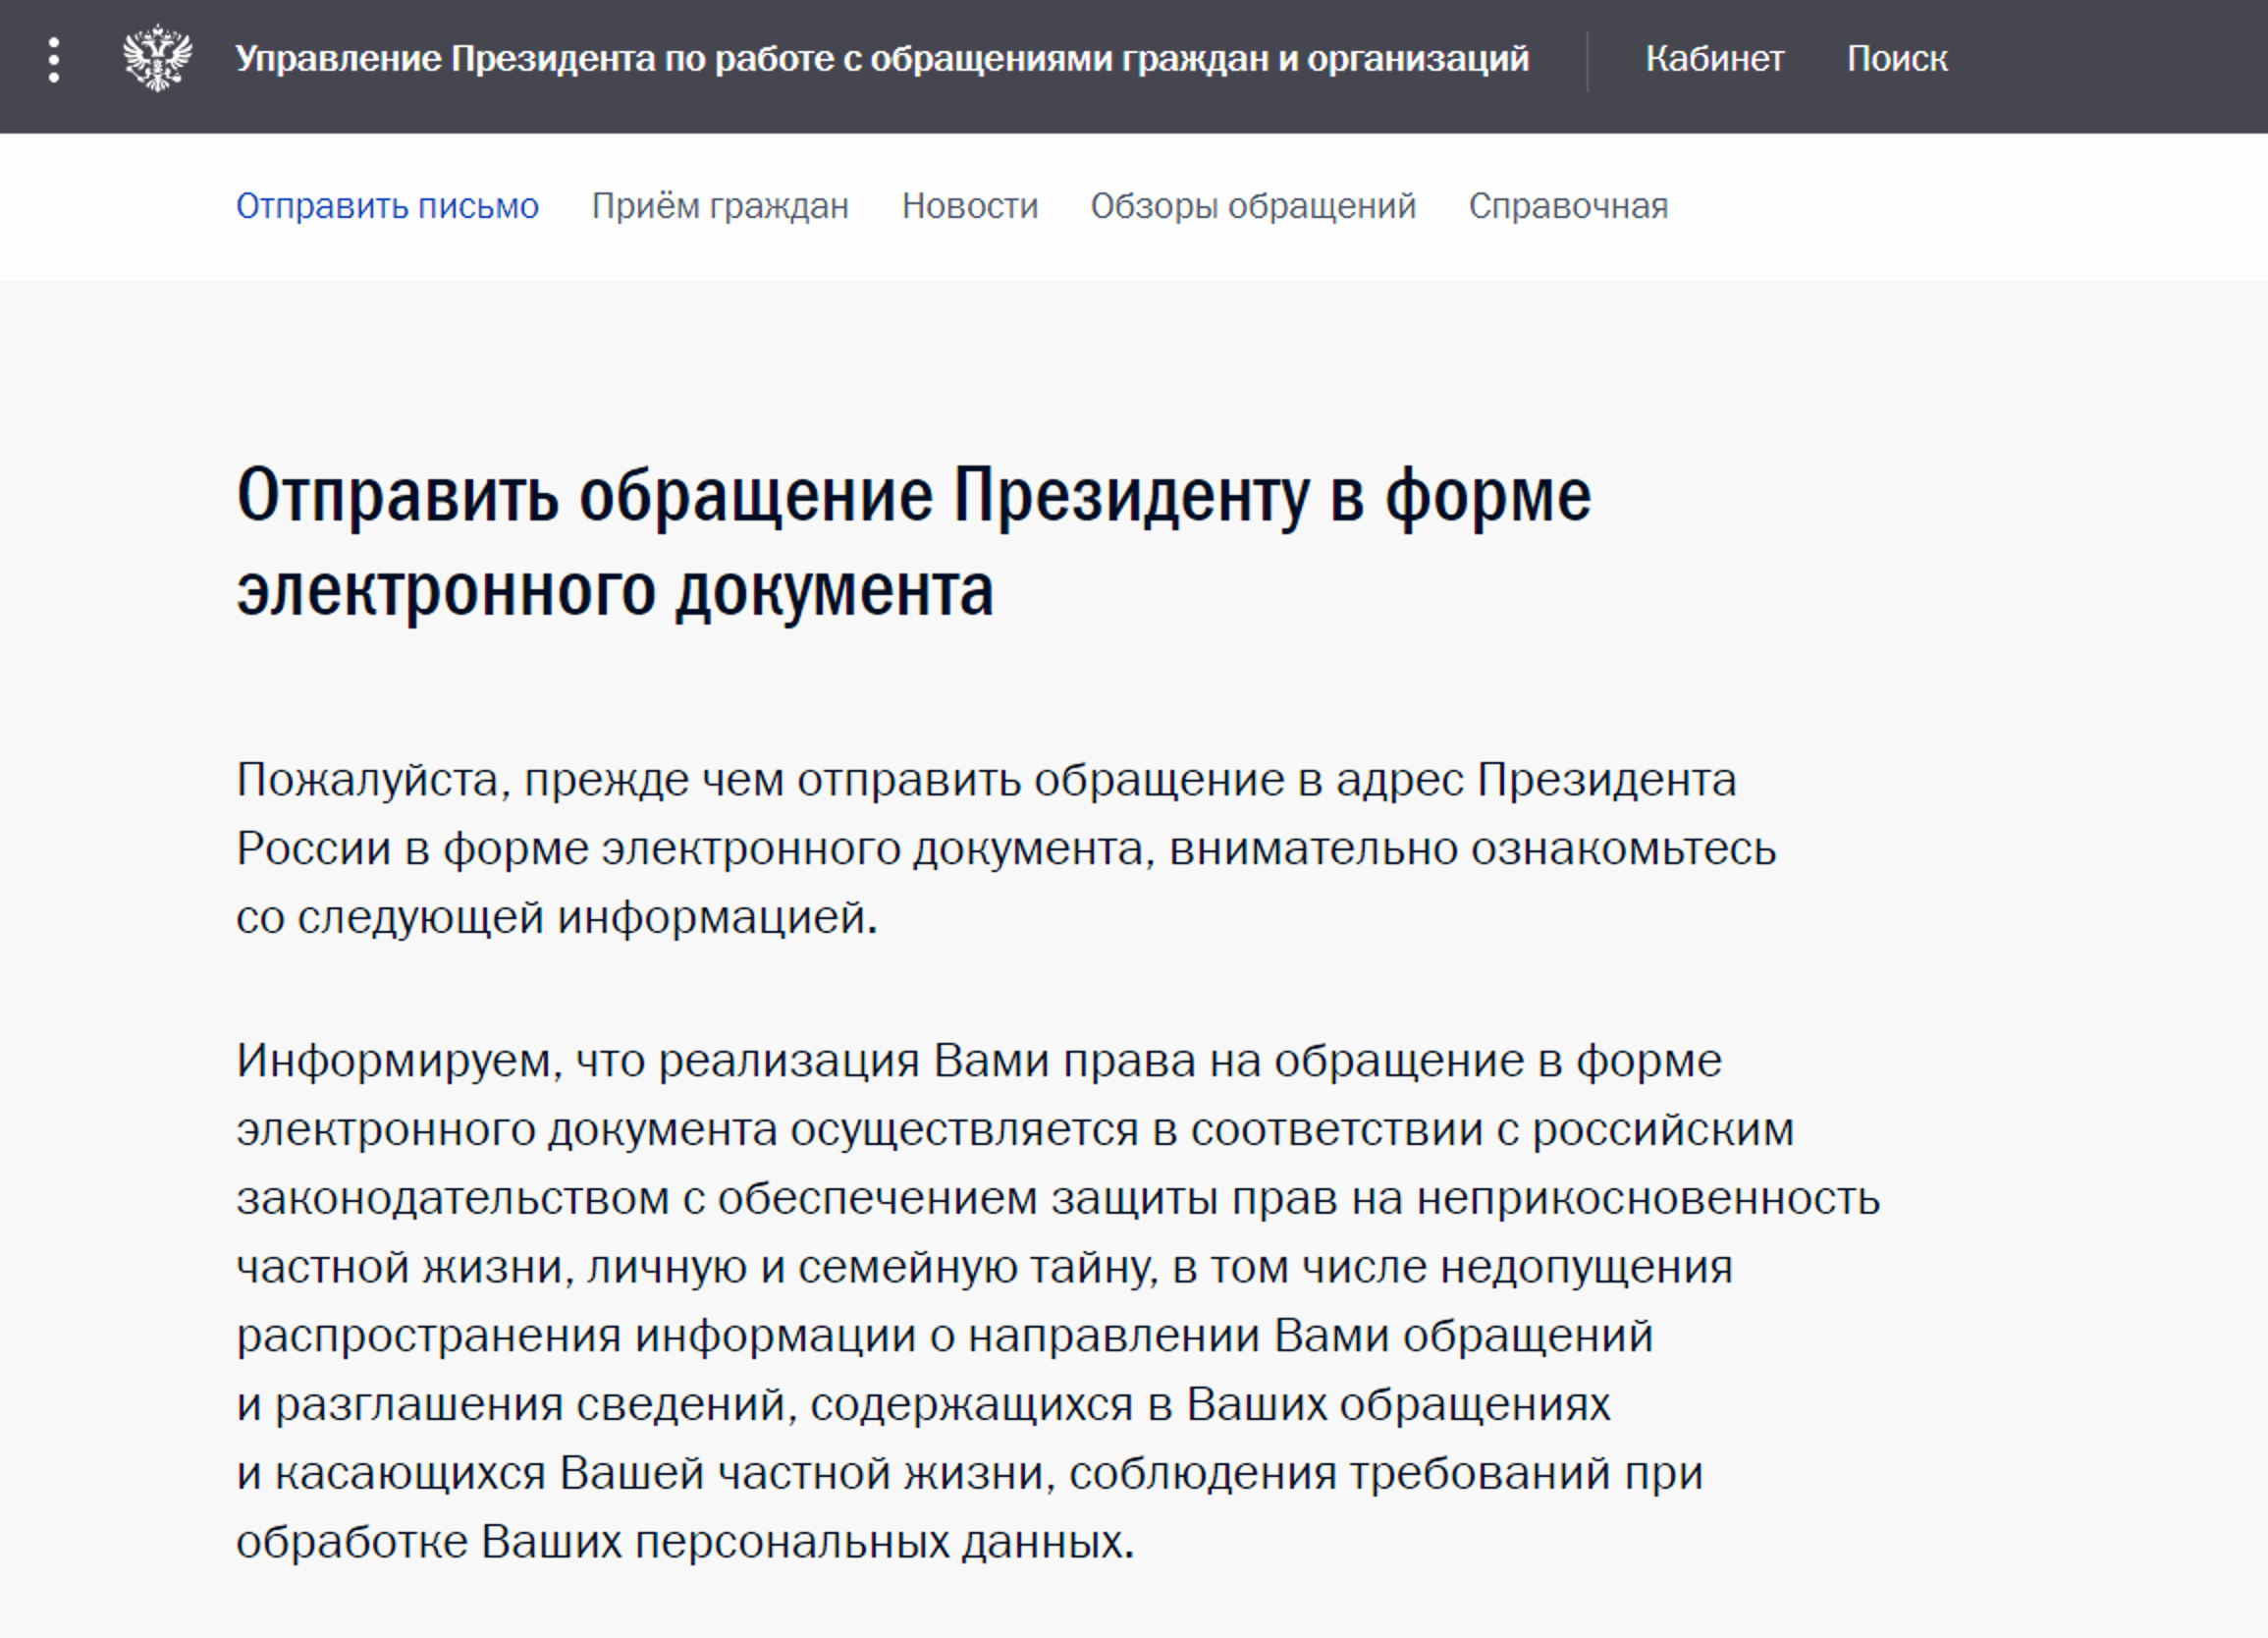 Личный сайт президента жалоба. Администрация президента РФ обращение граждан.